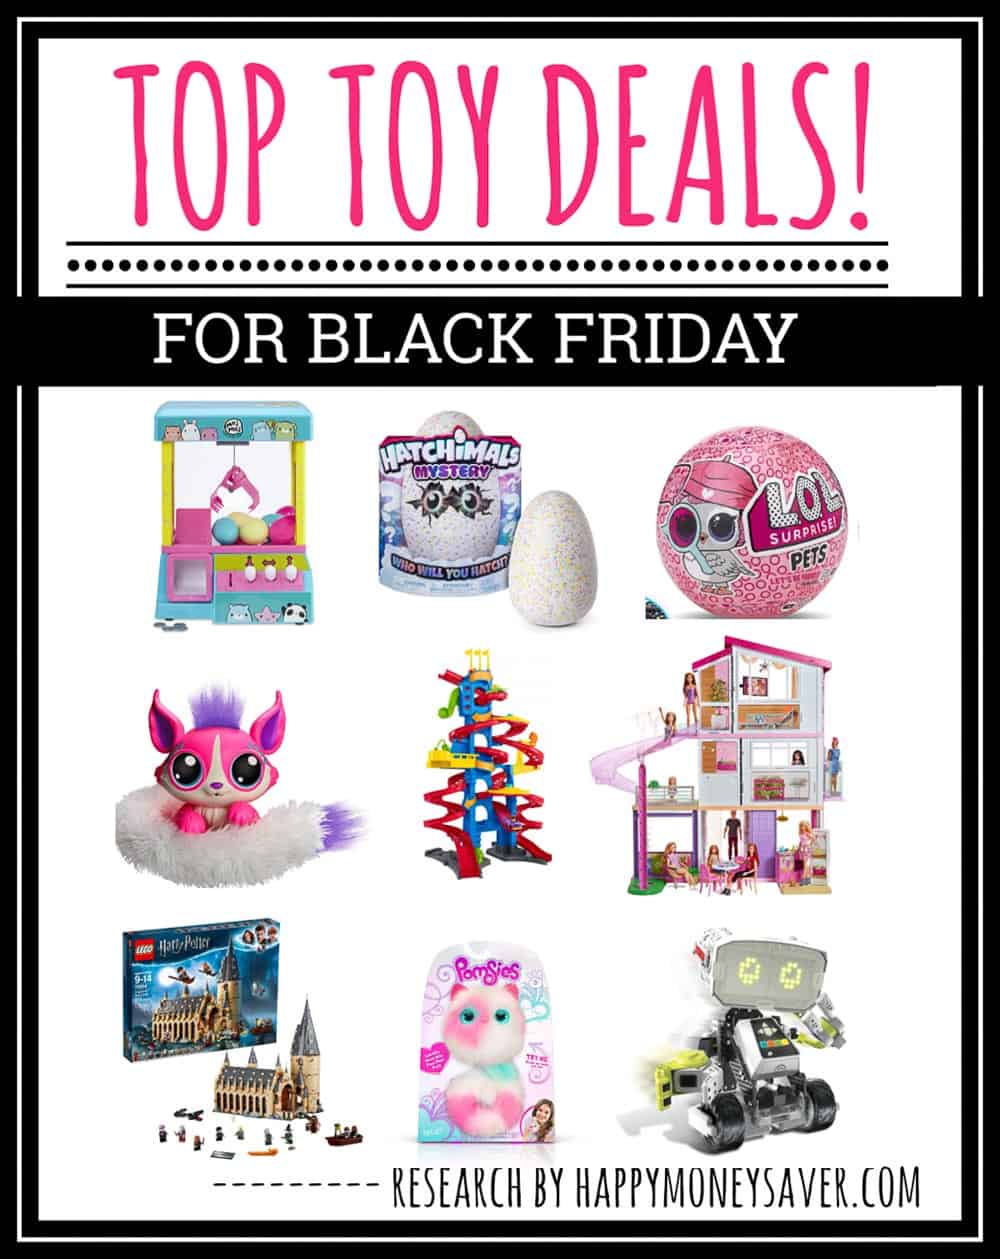 black friday deals 2018 toys